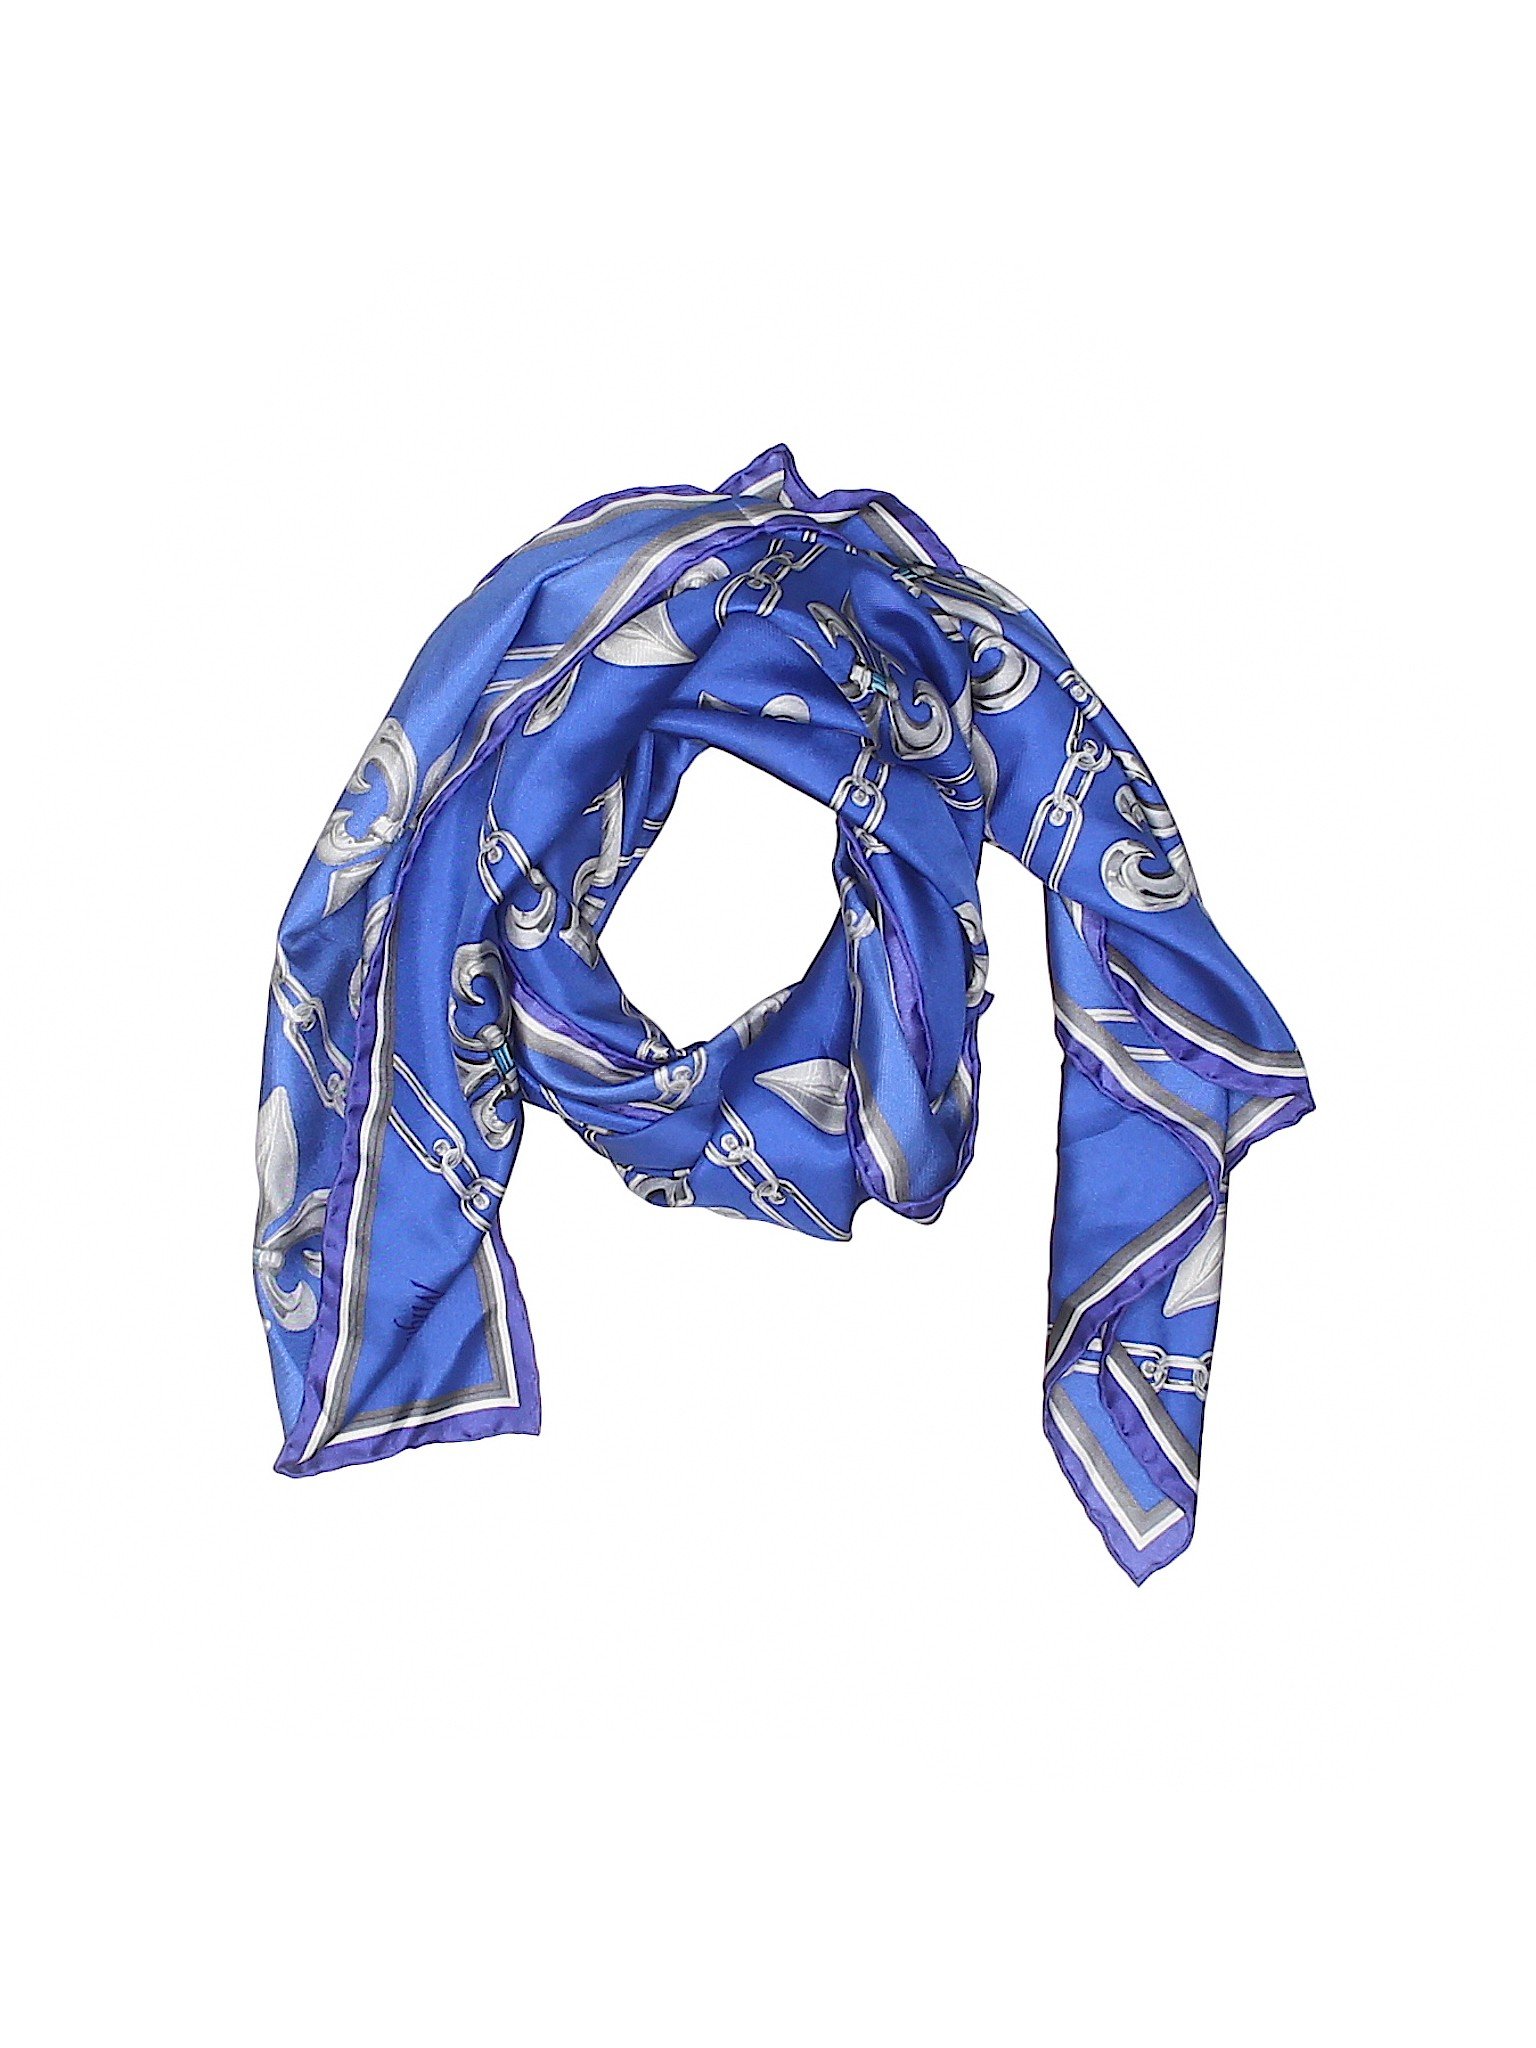 Mignon Faget 100% Silk Print Blue Silk Scarf One Size - 59% off | thredUP